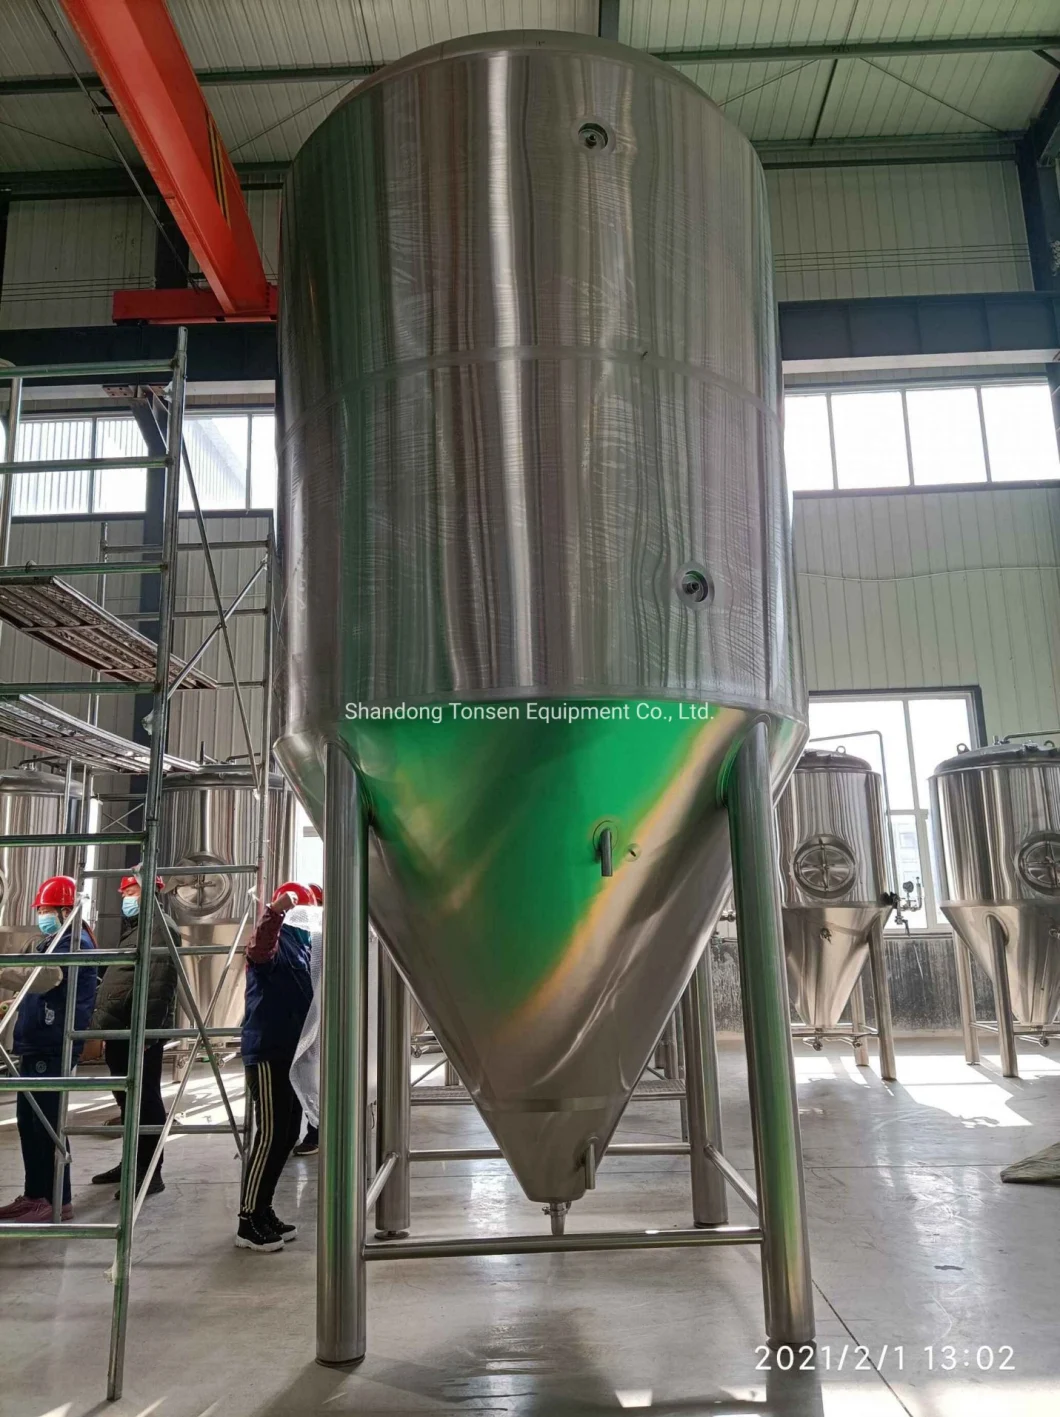 China Supplier Micro Draft Beer Brewery Equipment&Mash Tun